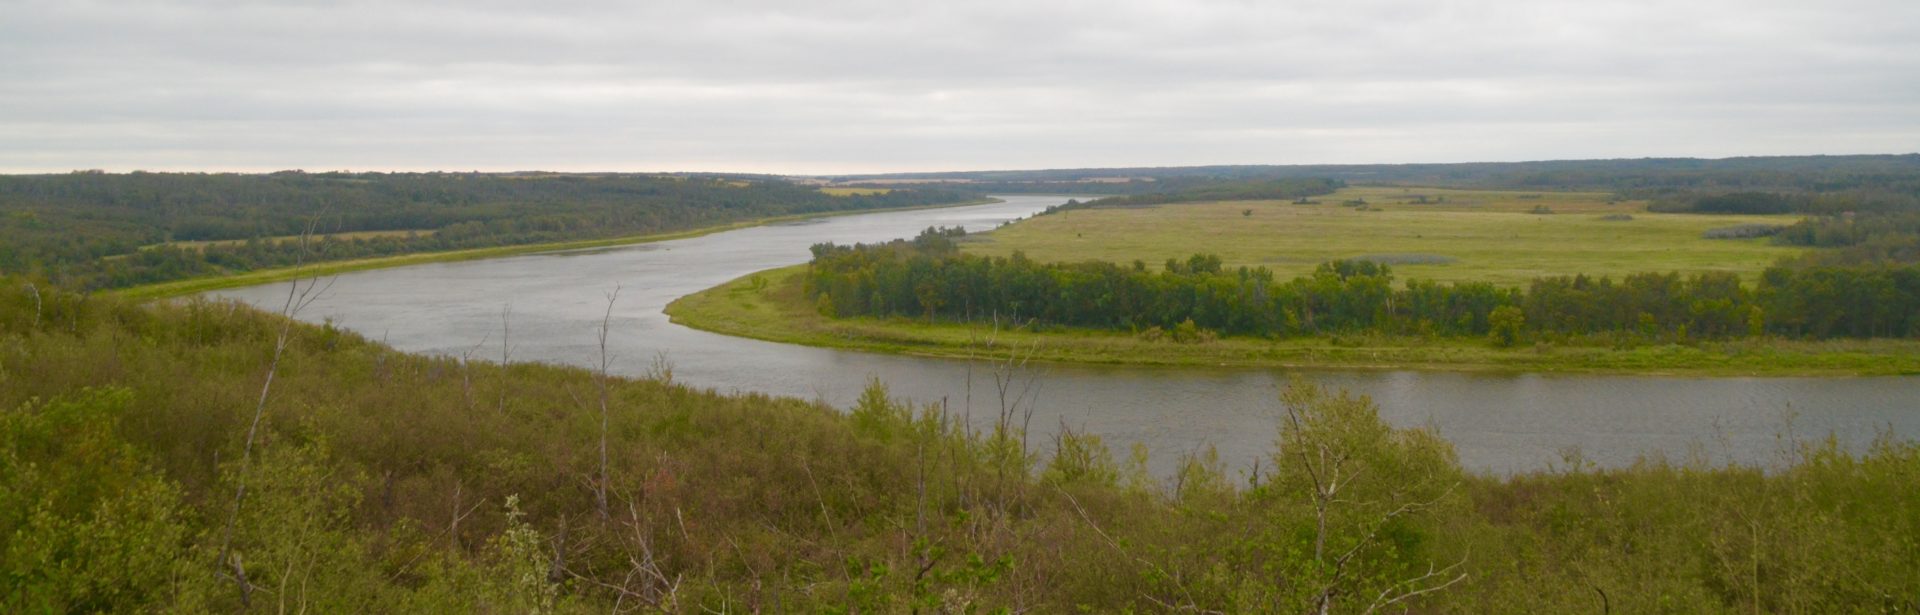 Photo of the South Saskatchewan River